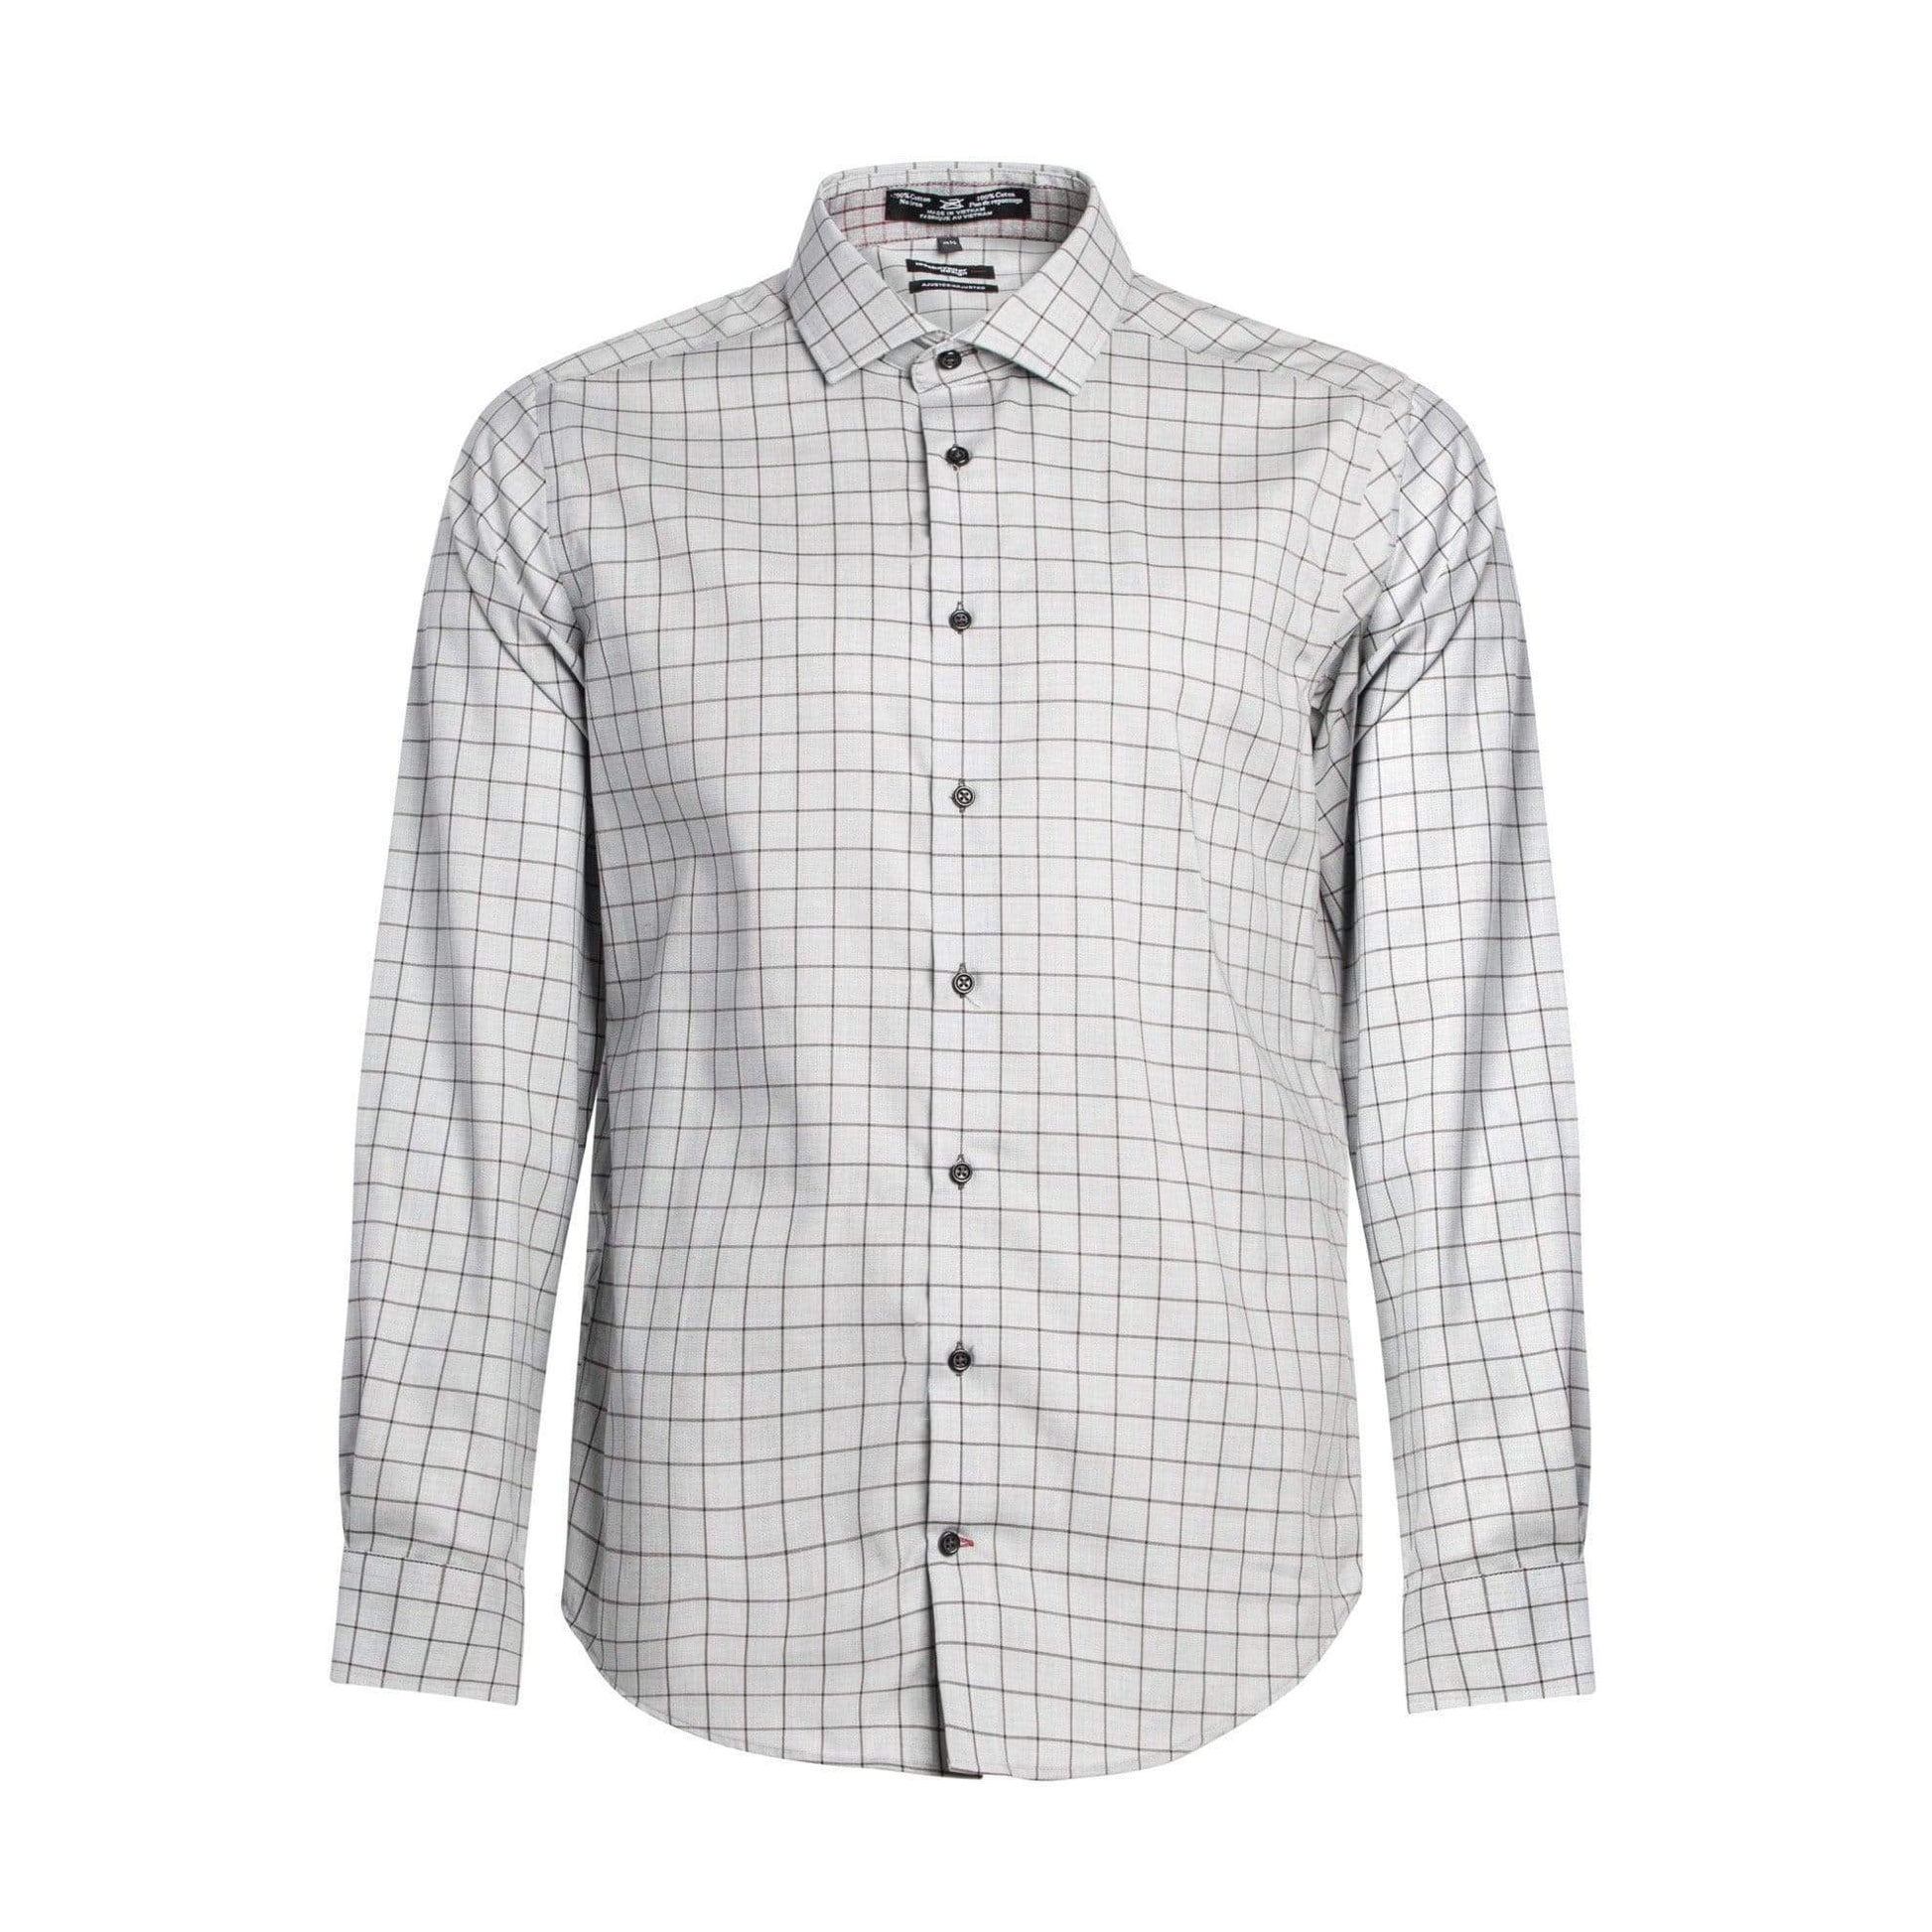 Leo Chevalier Design Grey Leo Chevalier Fitted 100% Cotton Non Iron Dress Shirts